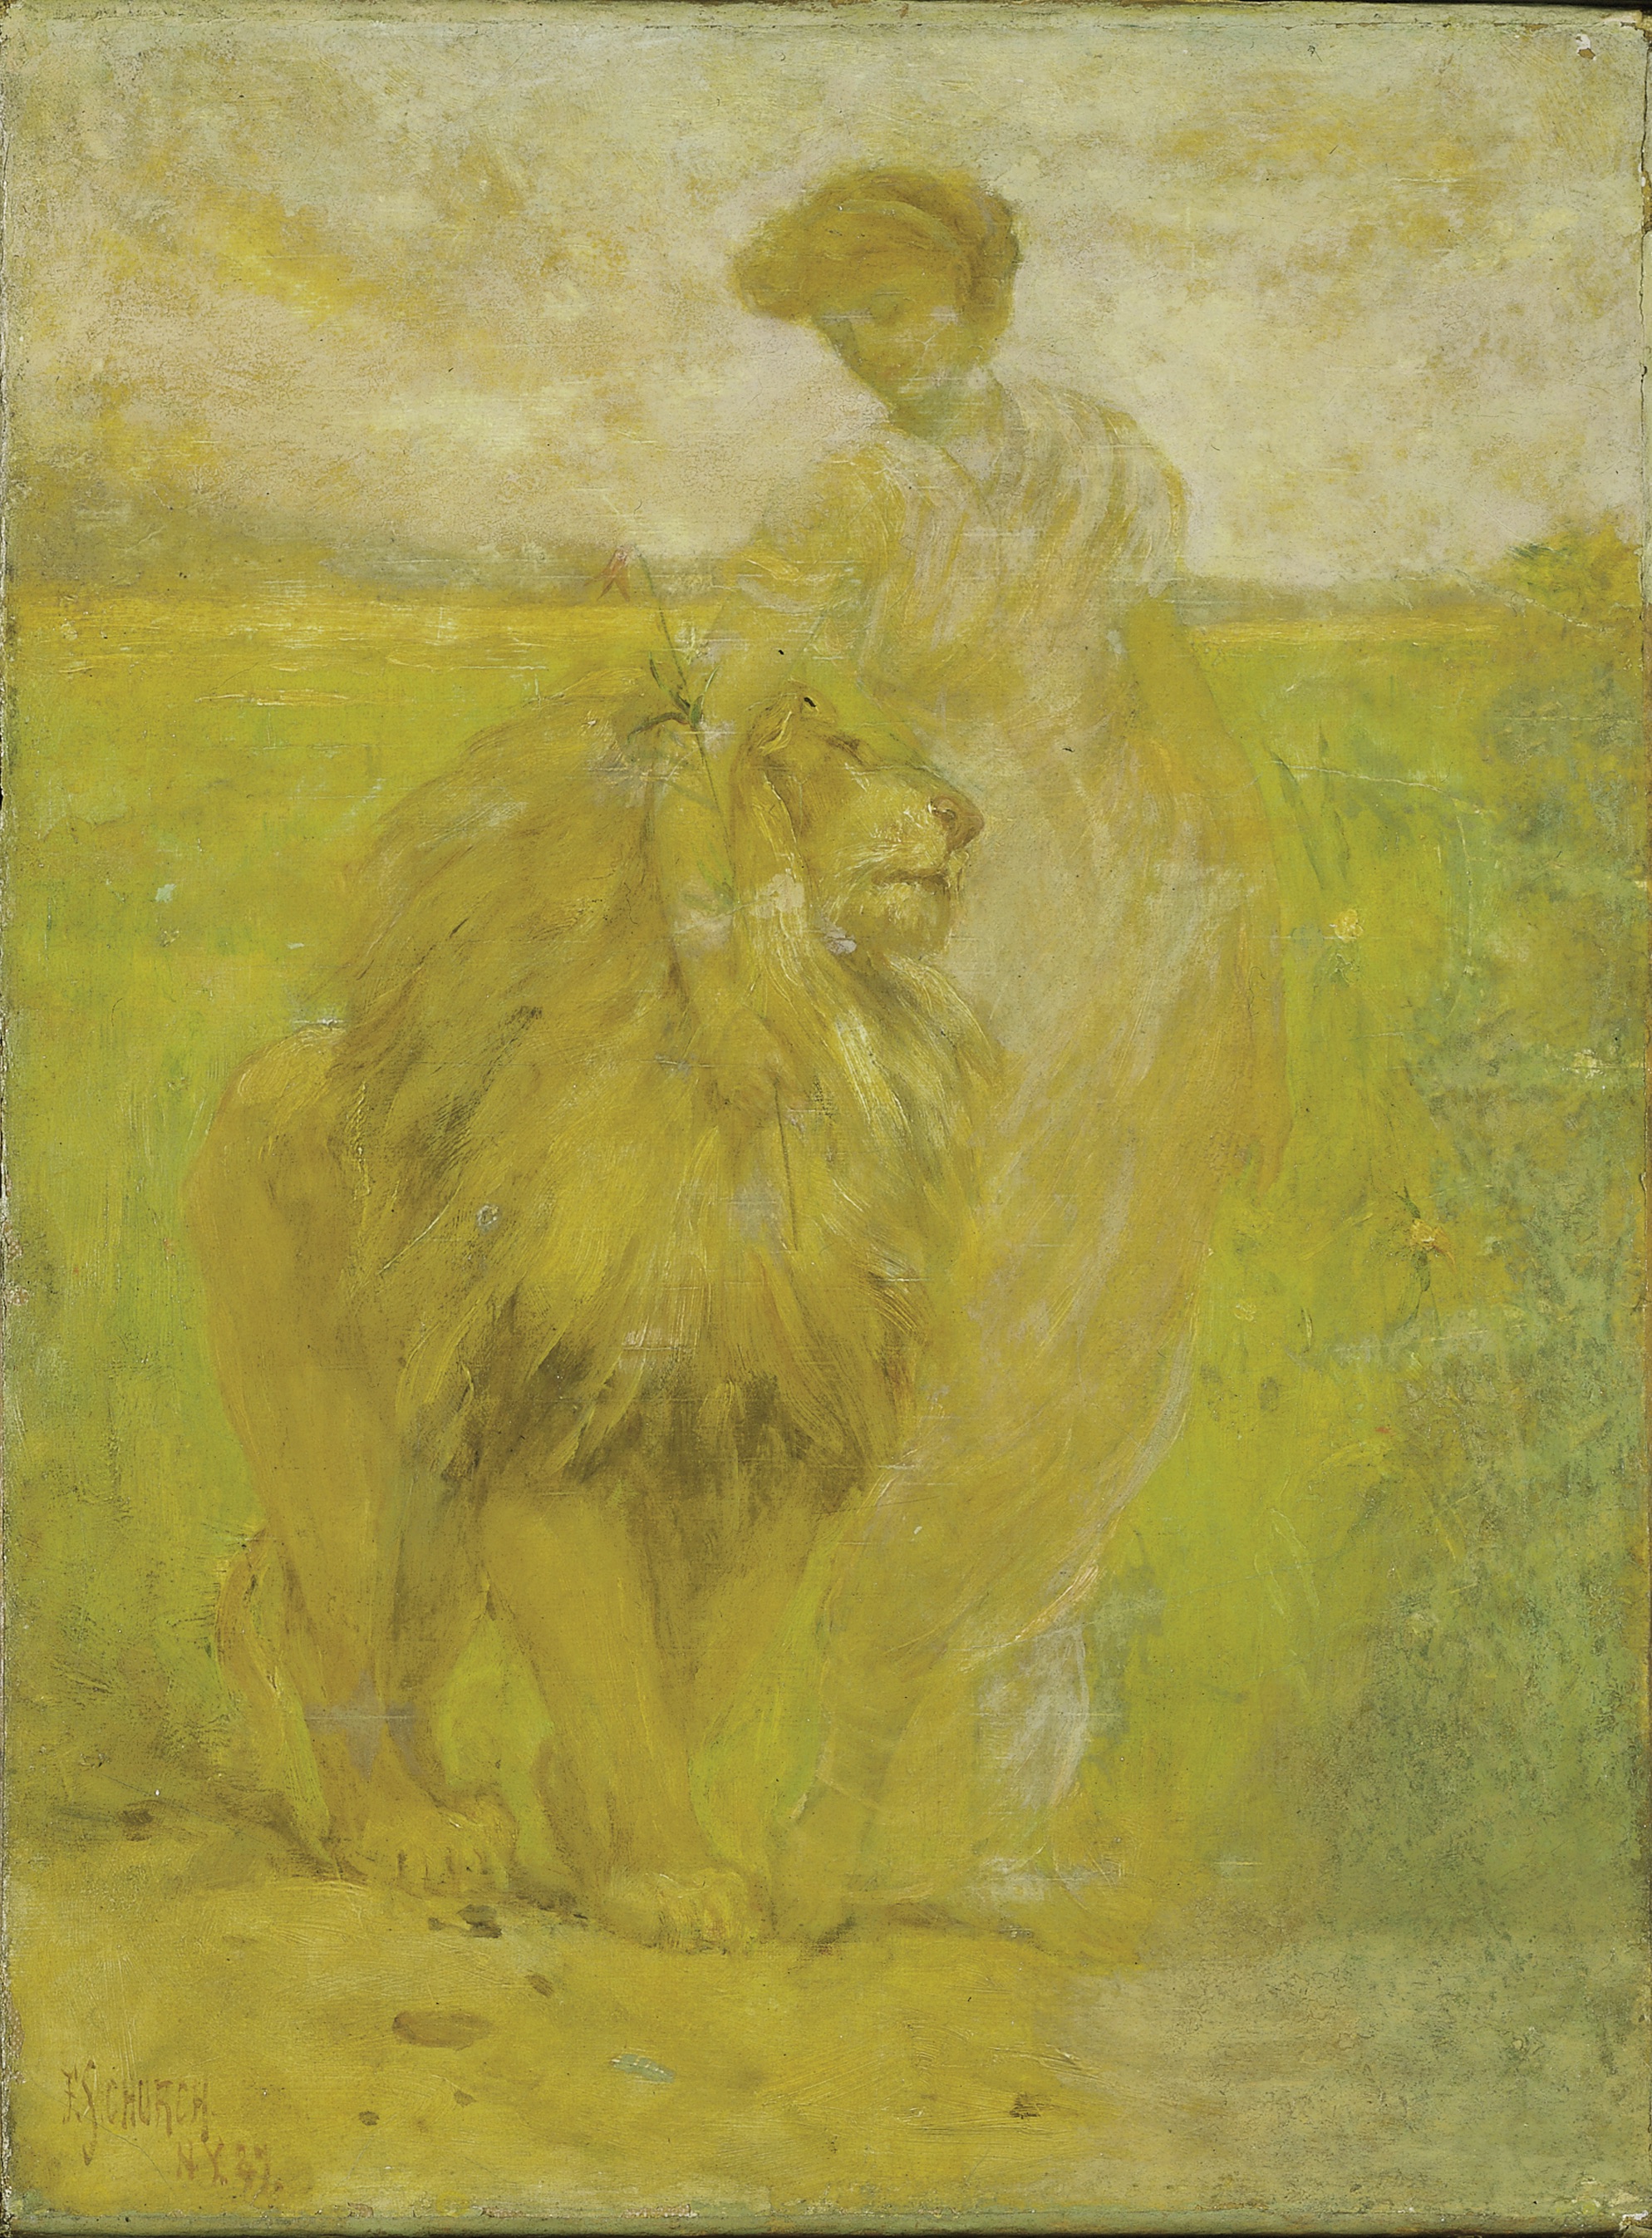 Supremacy by Frederick Stuart Church - 1887 - 40.9 x 30.4 cm Smithsonian American Art Museum